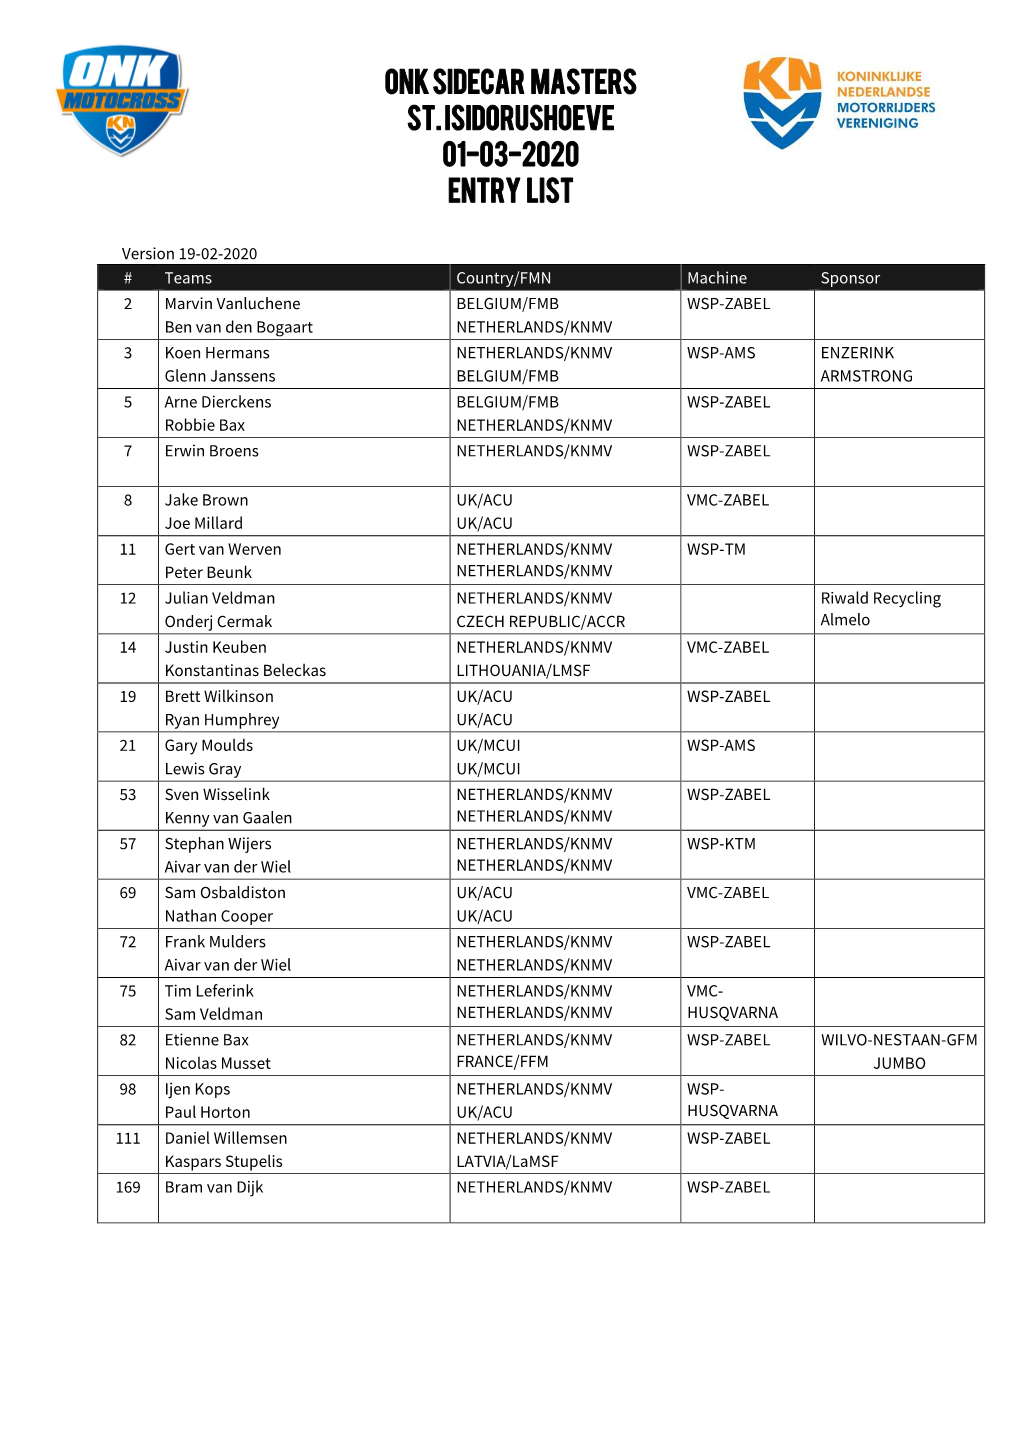 ONK Sidecar Masters St. Isidorushoeve 01-03-2020 Entry List